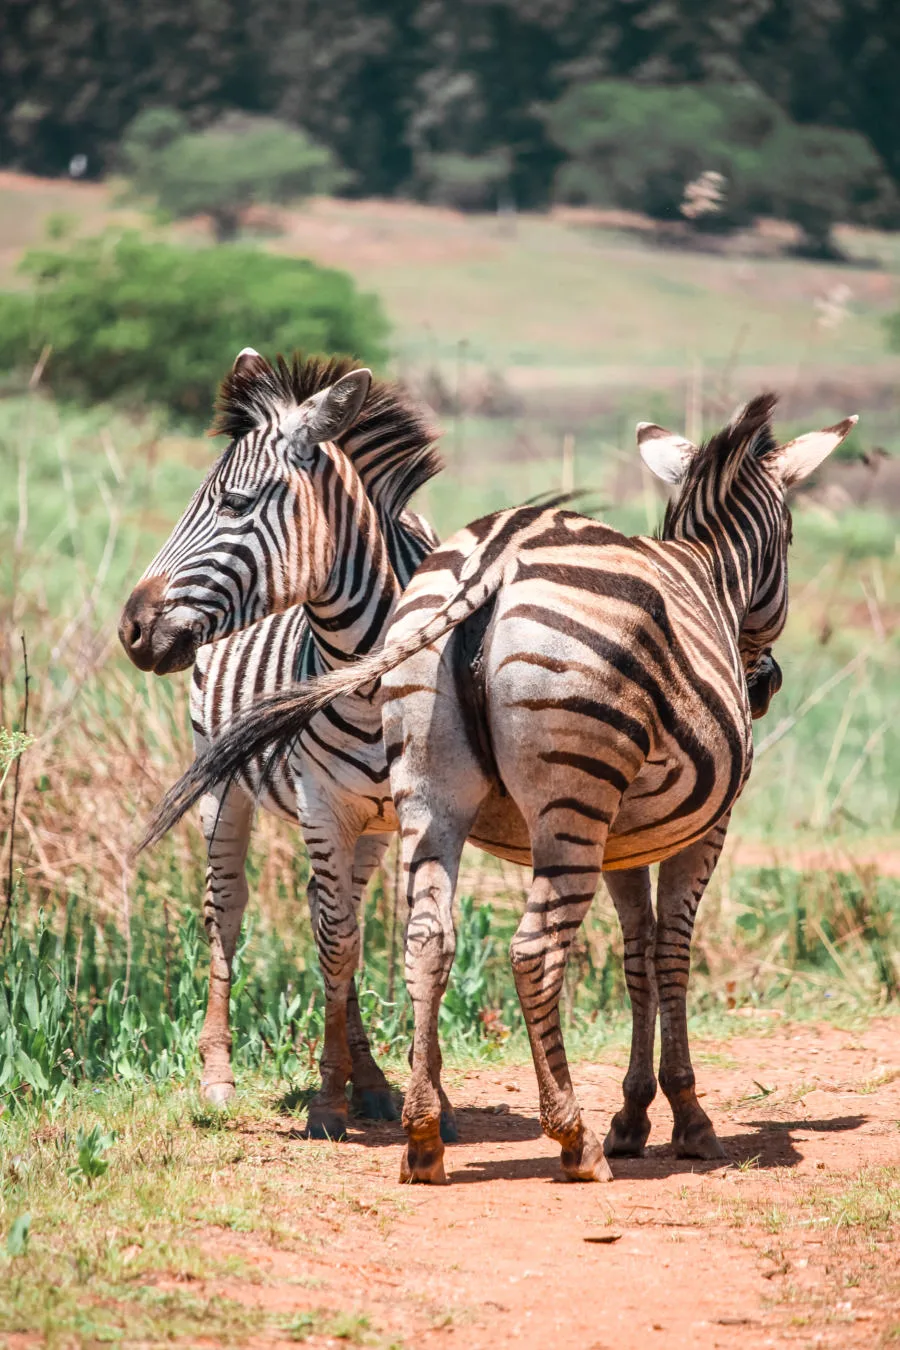 Two zebras in Mlilwane National Park in Swaziland